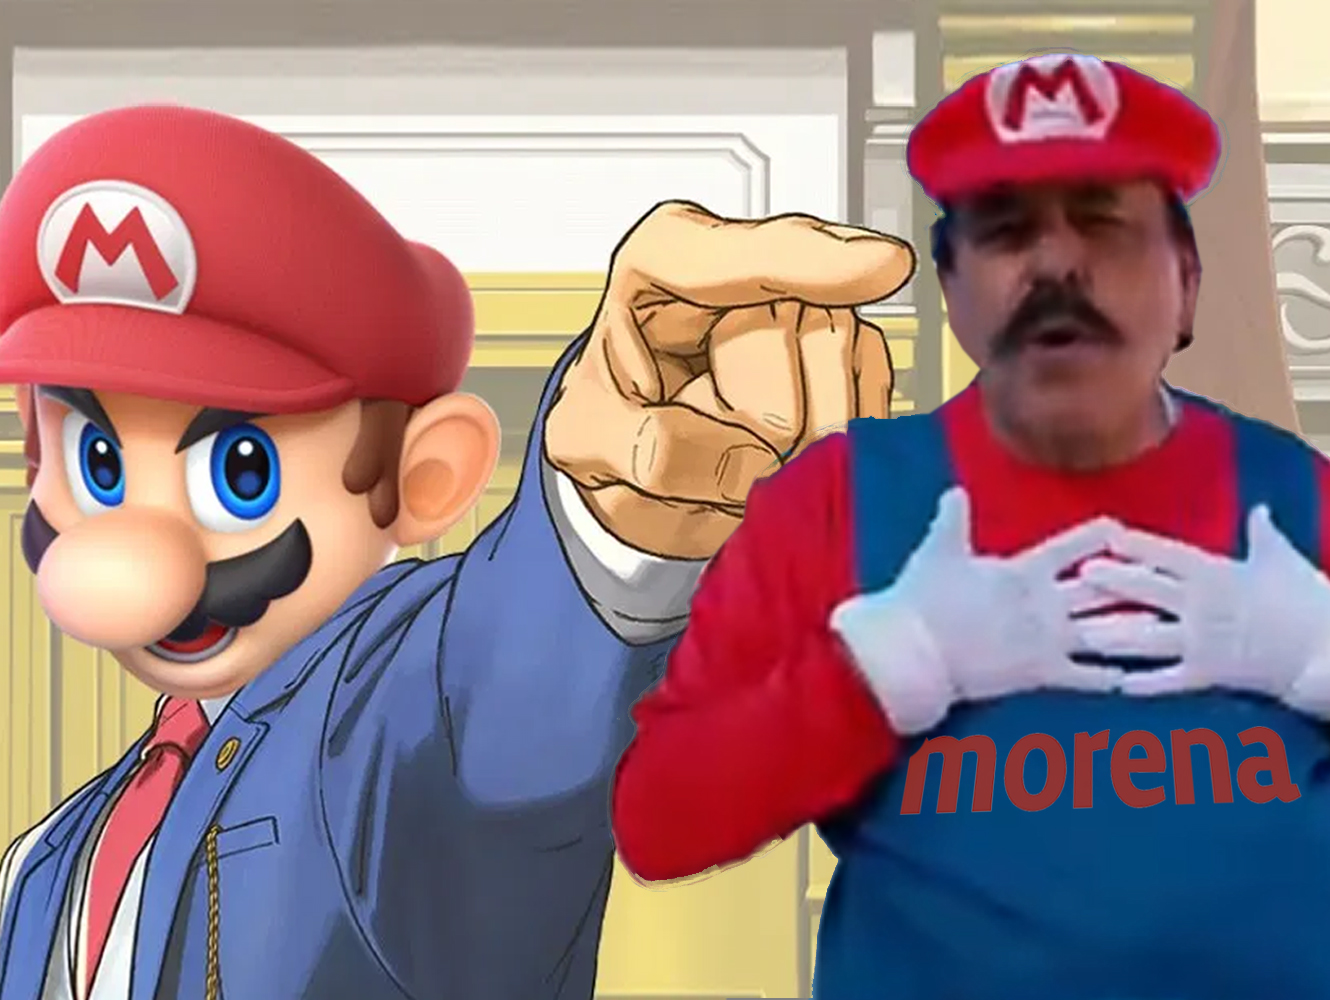 Morena VS Nintendo